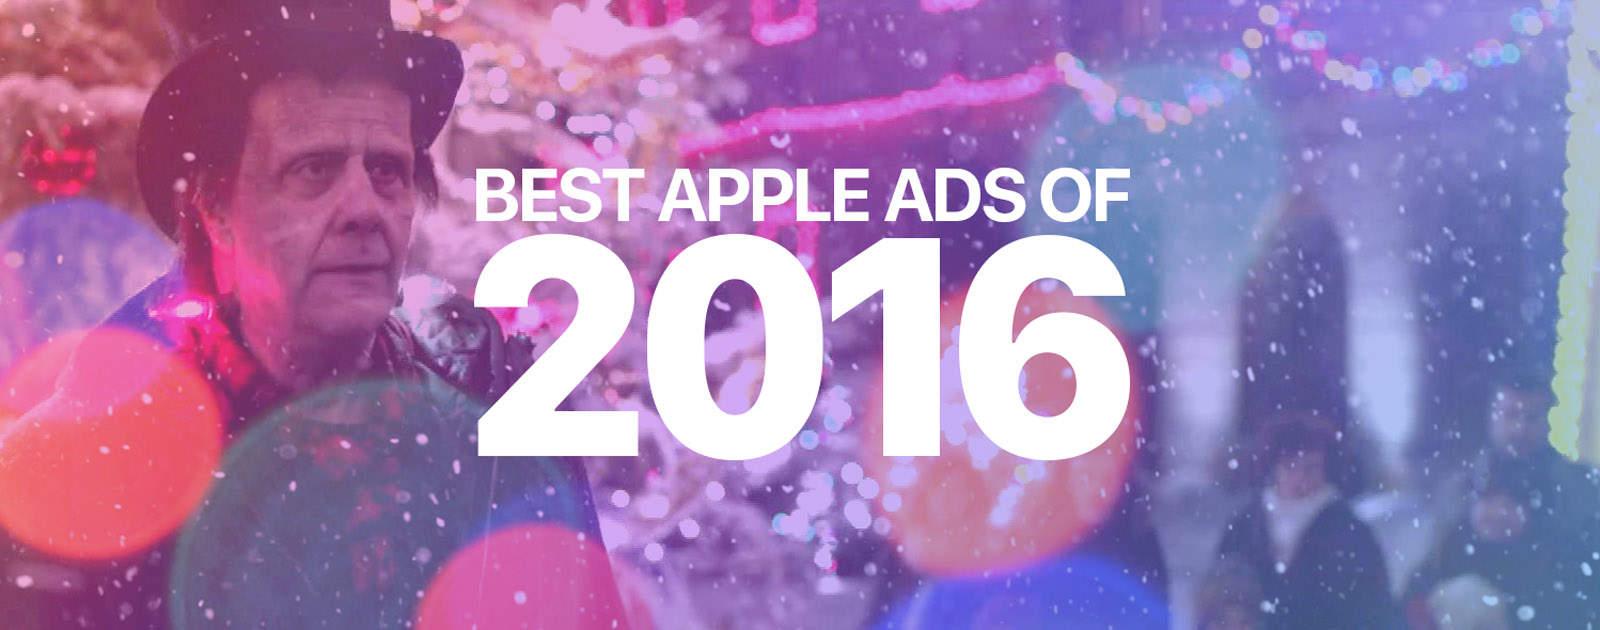 Best Apple ads of 2016